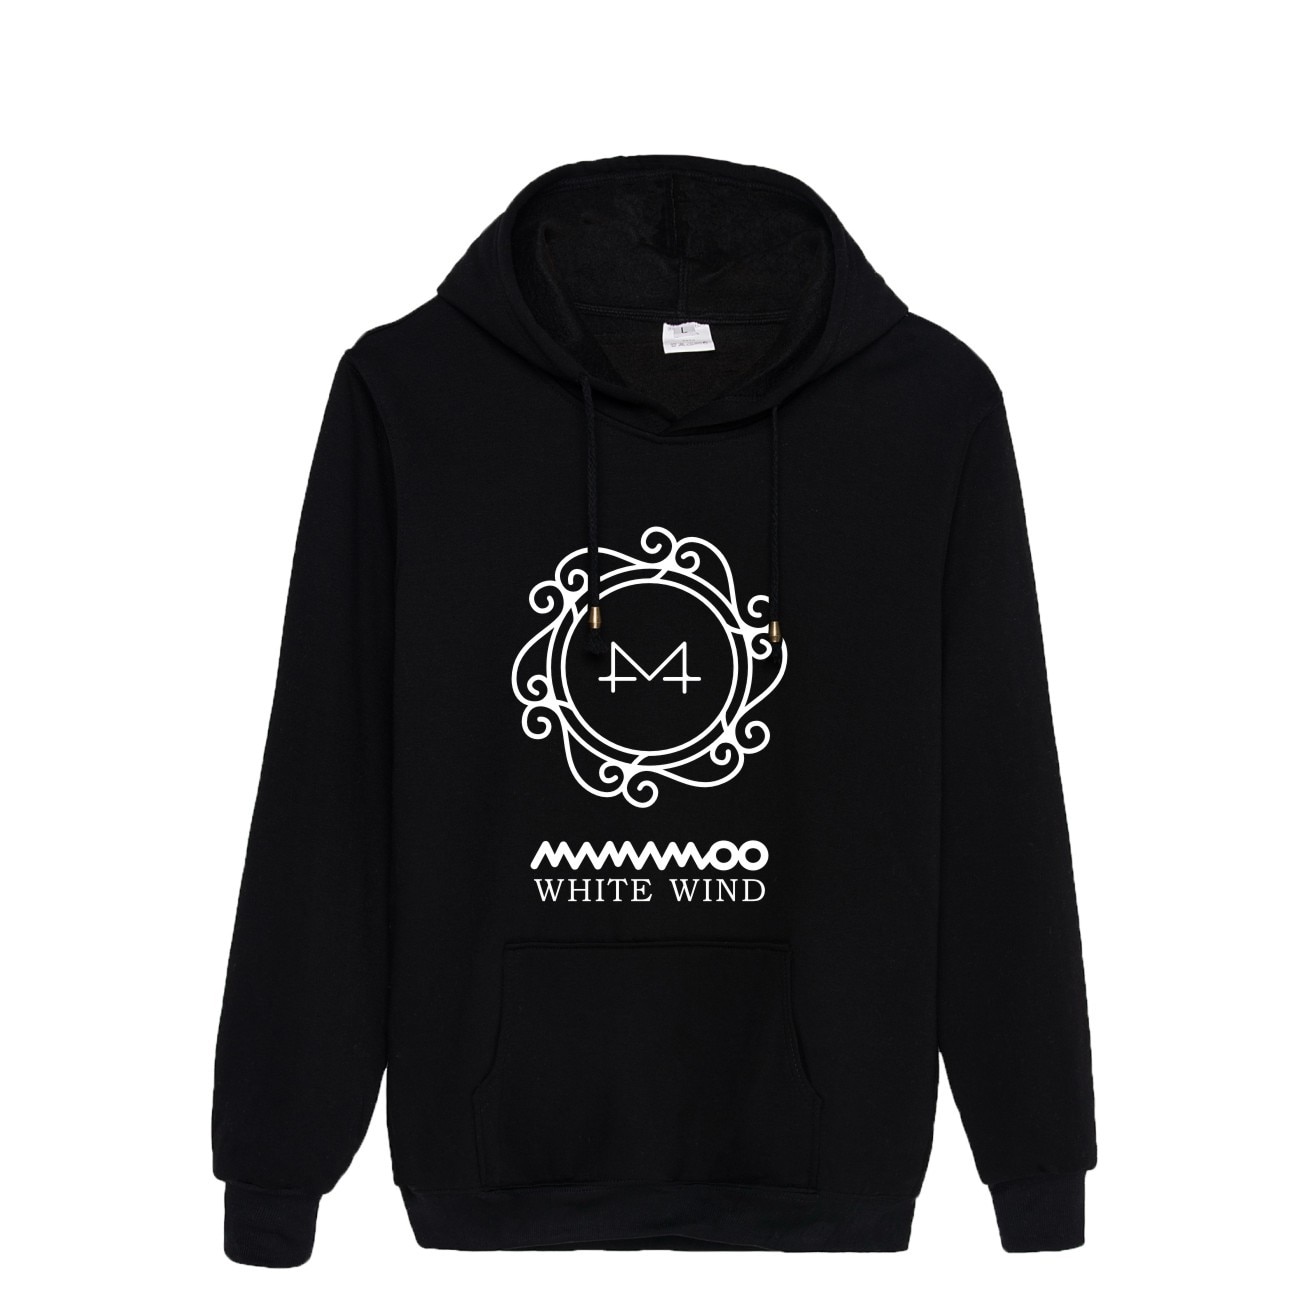 New arrival MAMAMOO pullover Sweatshirt New Album WHITE WIND Hoodie kpop Harajuku Hip hop Tops Coat - Mamamoo Store